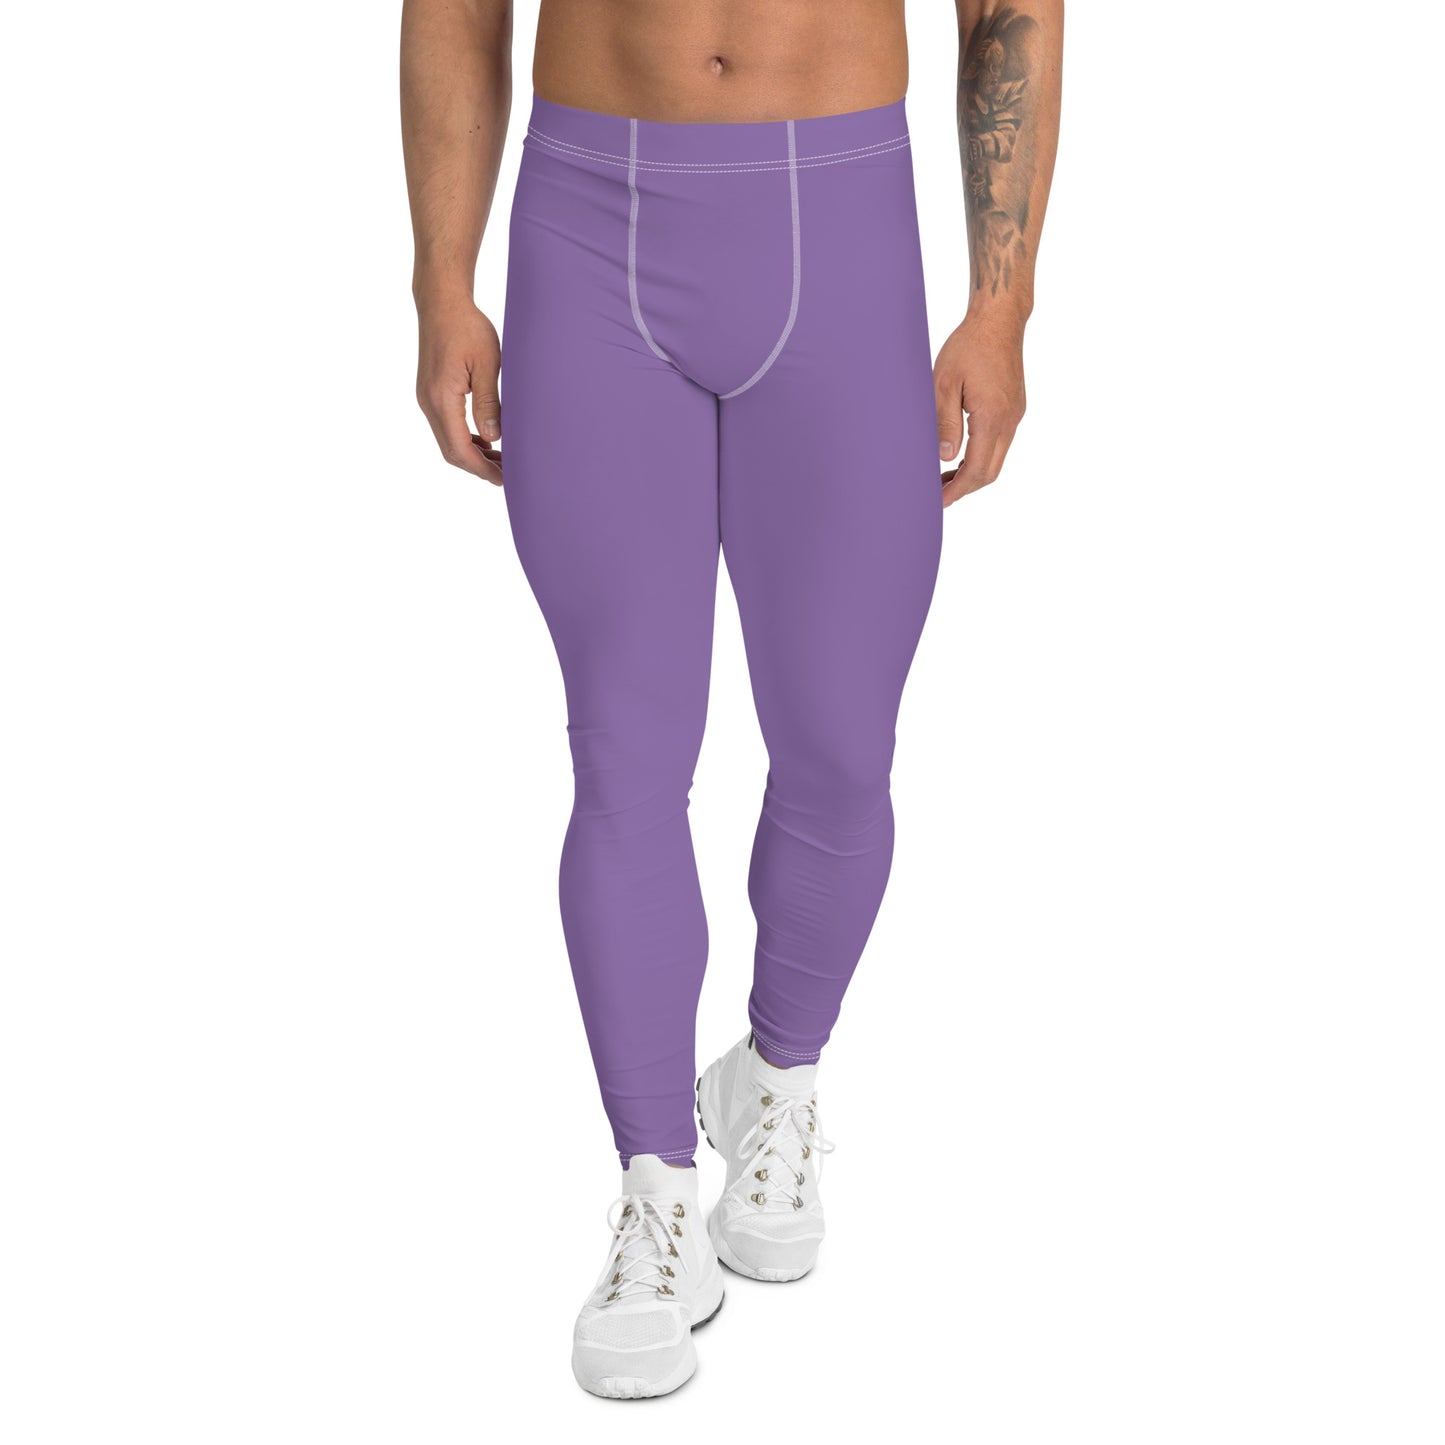 Humble Sportswear, men's color match long activewear stretchy leggings, purple